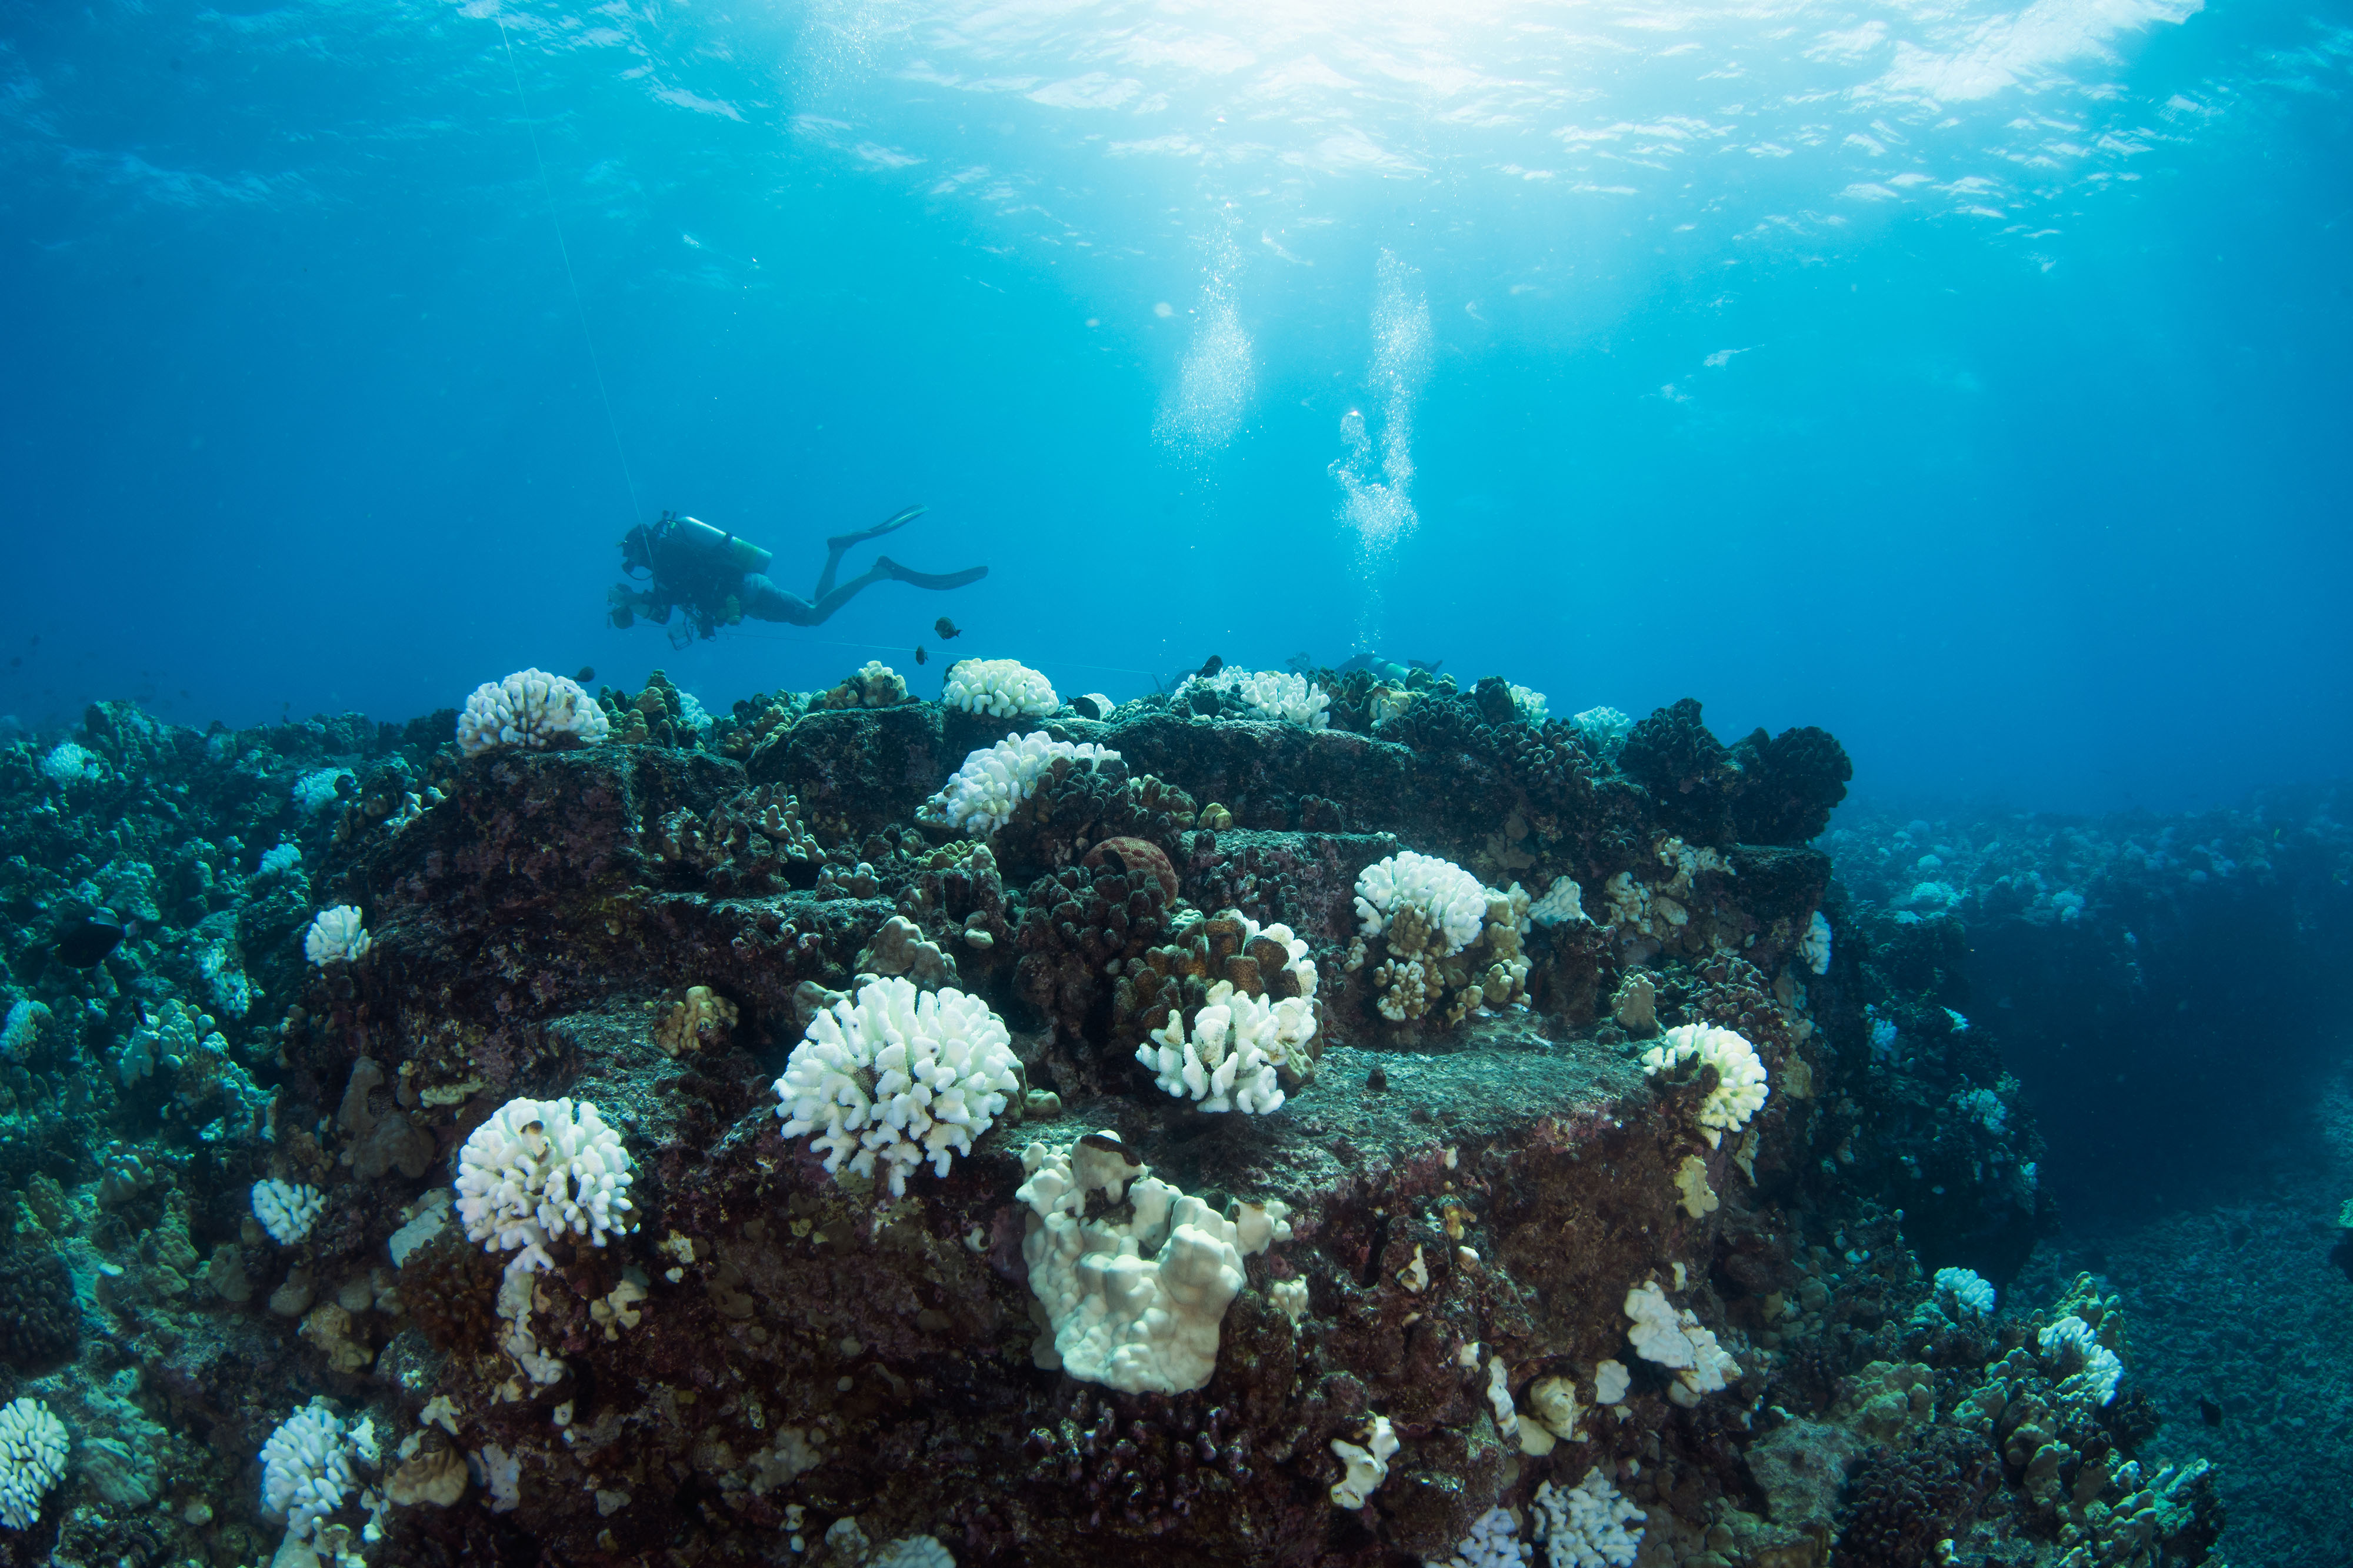 Research scuba diver surveys a reef of bleached coral.